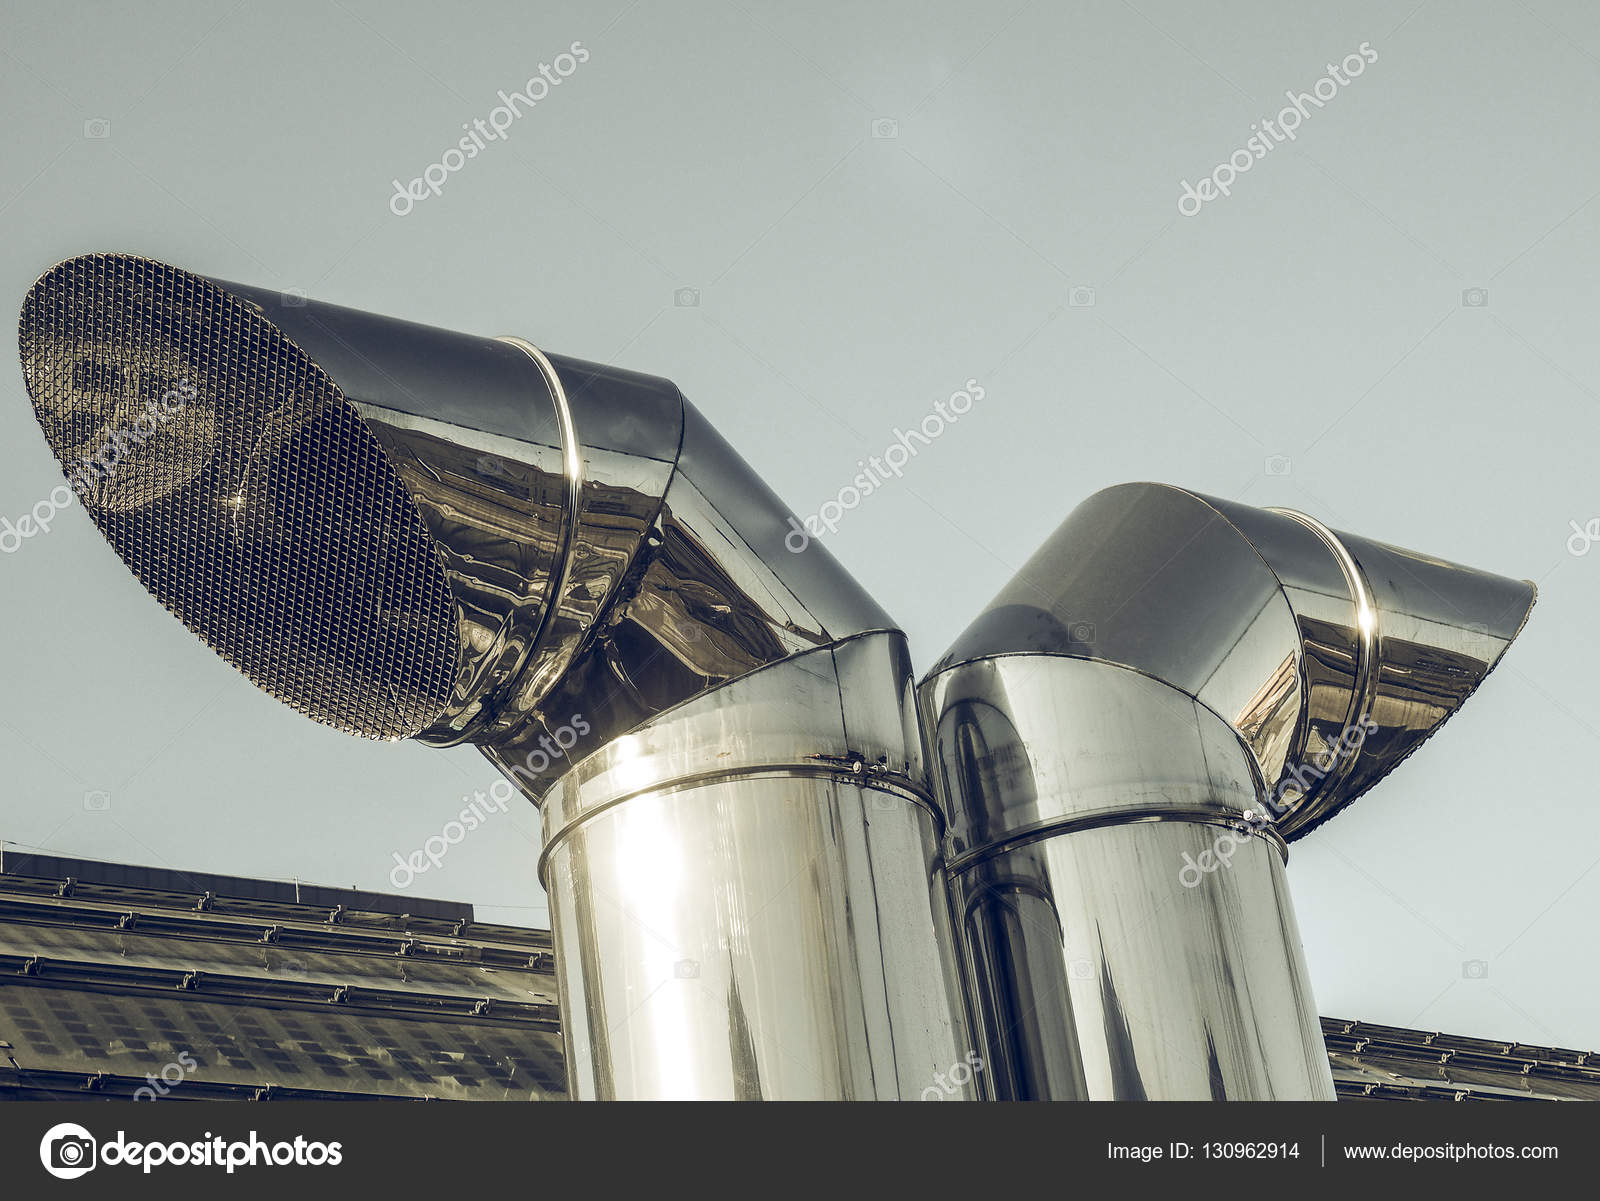 Vintage looking Vent pipe — Stock Photo © claudiodivizia #130962914